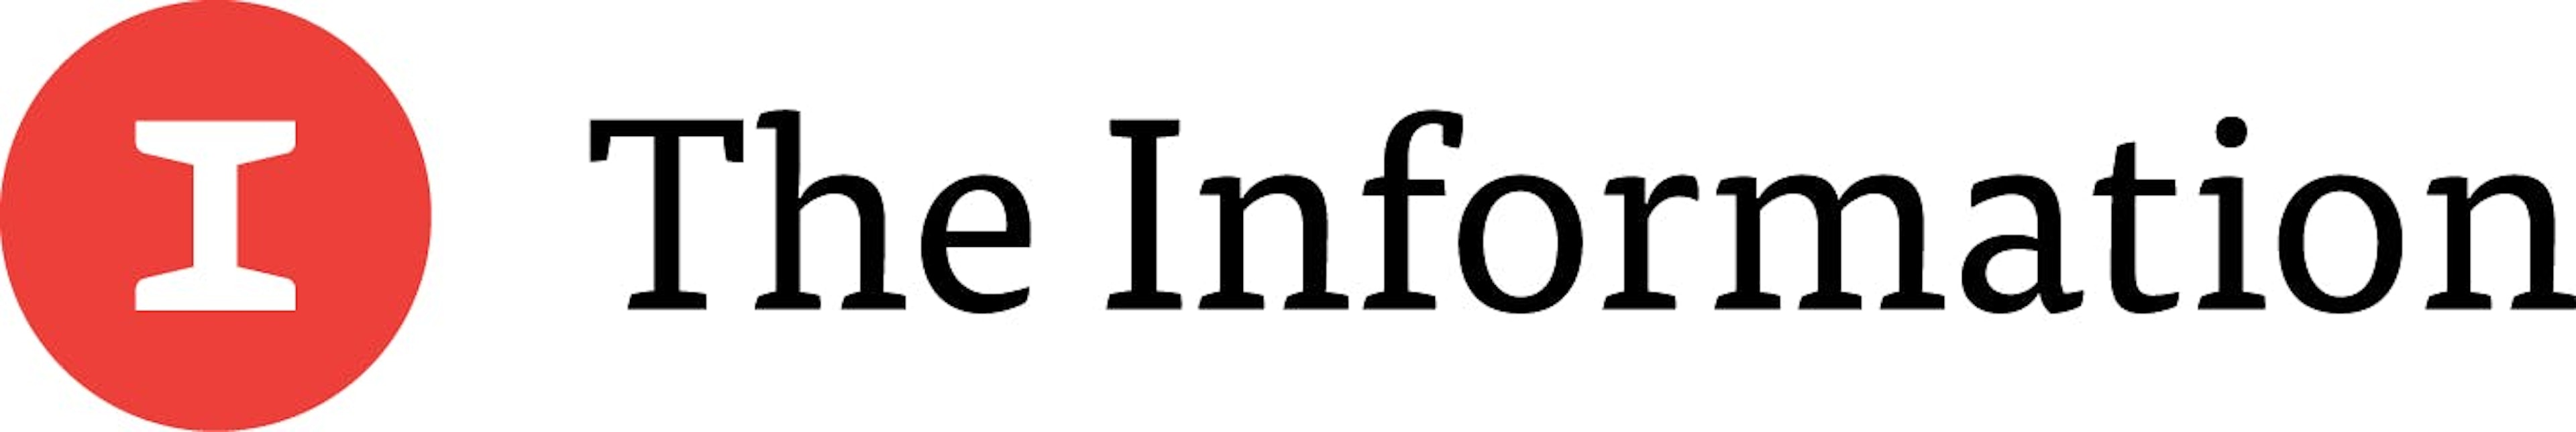 the-information-logo